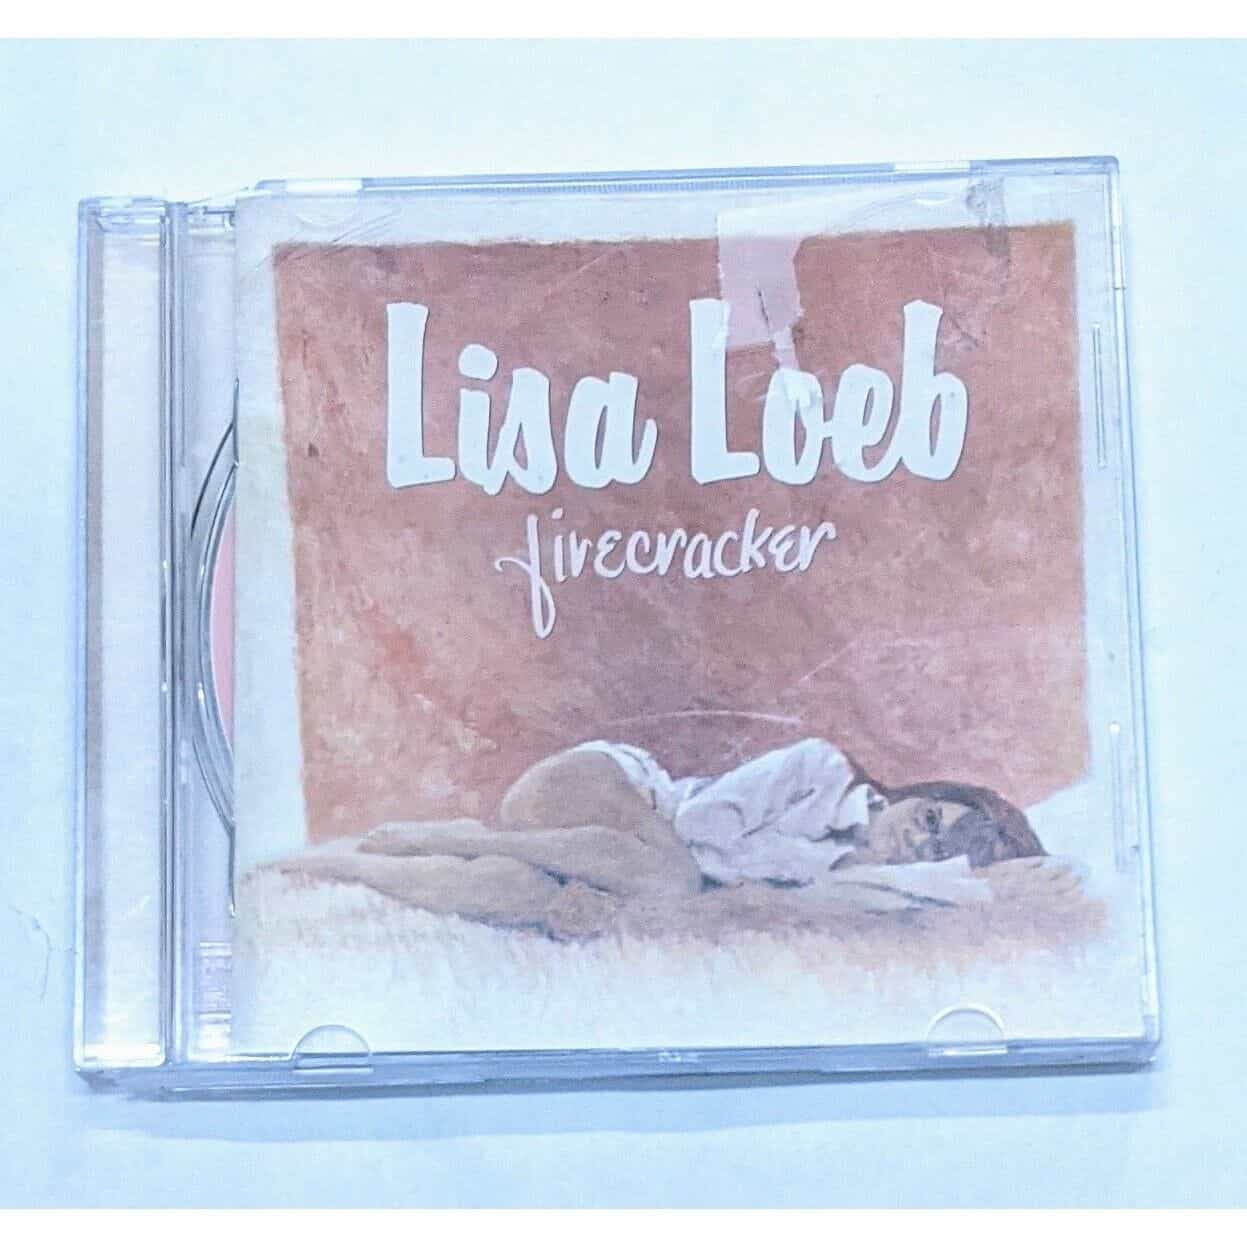 Firecracker Music Album by Lisa Loeb